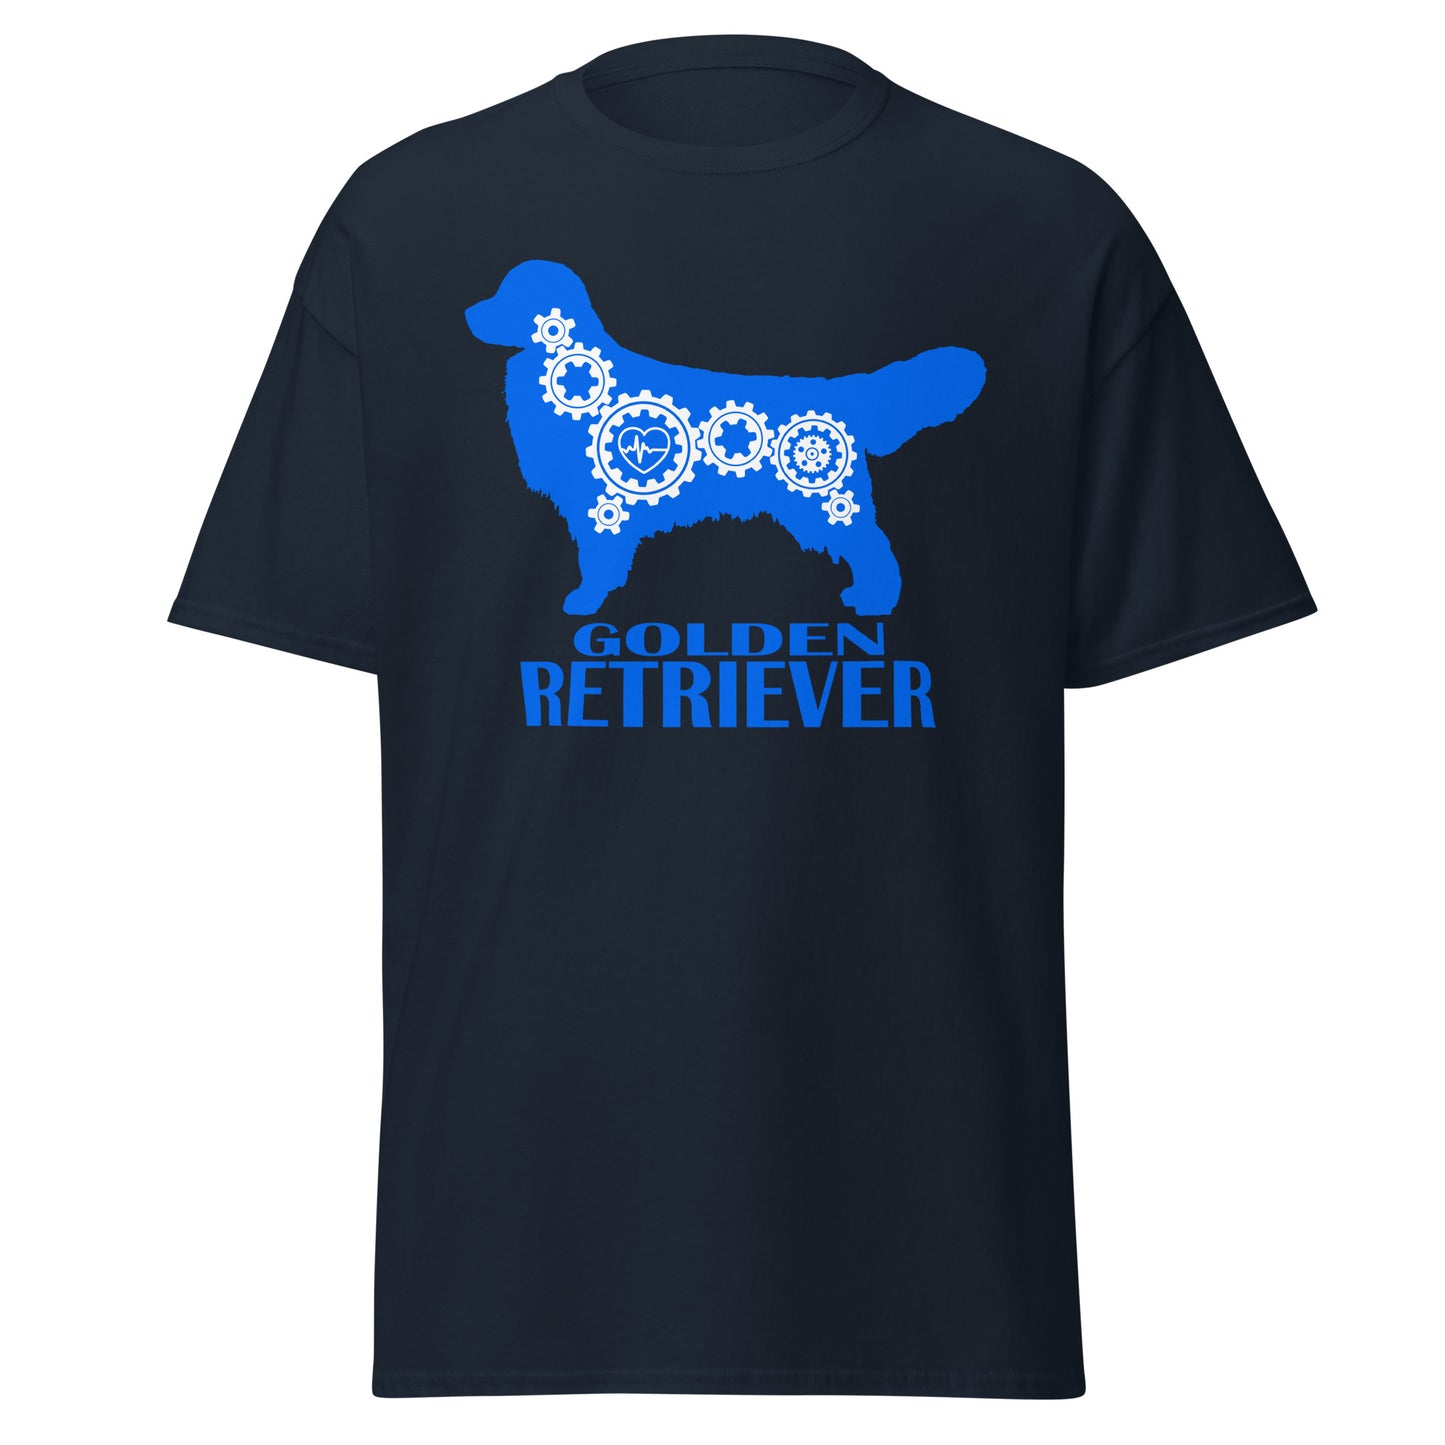 Golden Retriever Bionic men’s navy t-shirt by Dog Artistry.